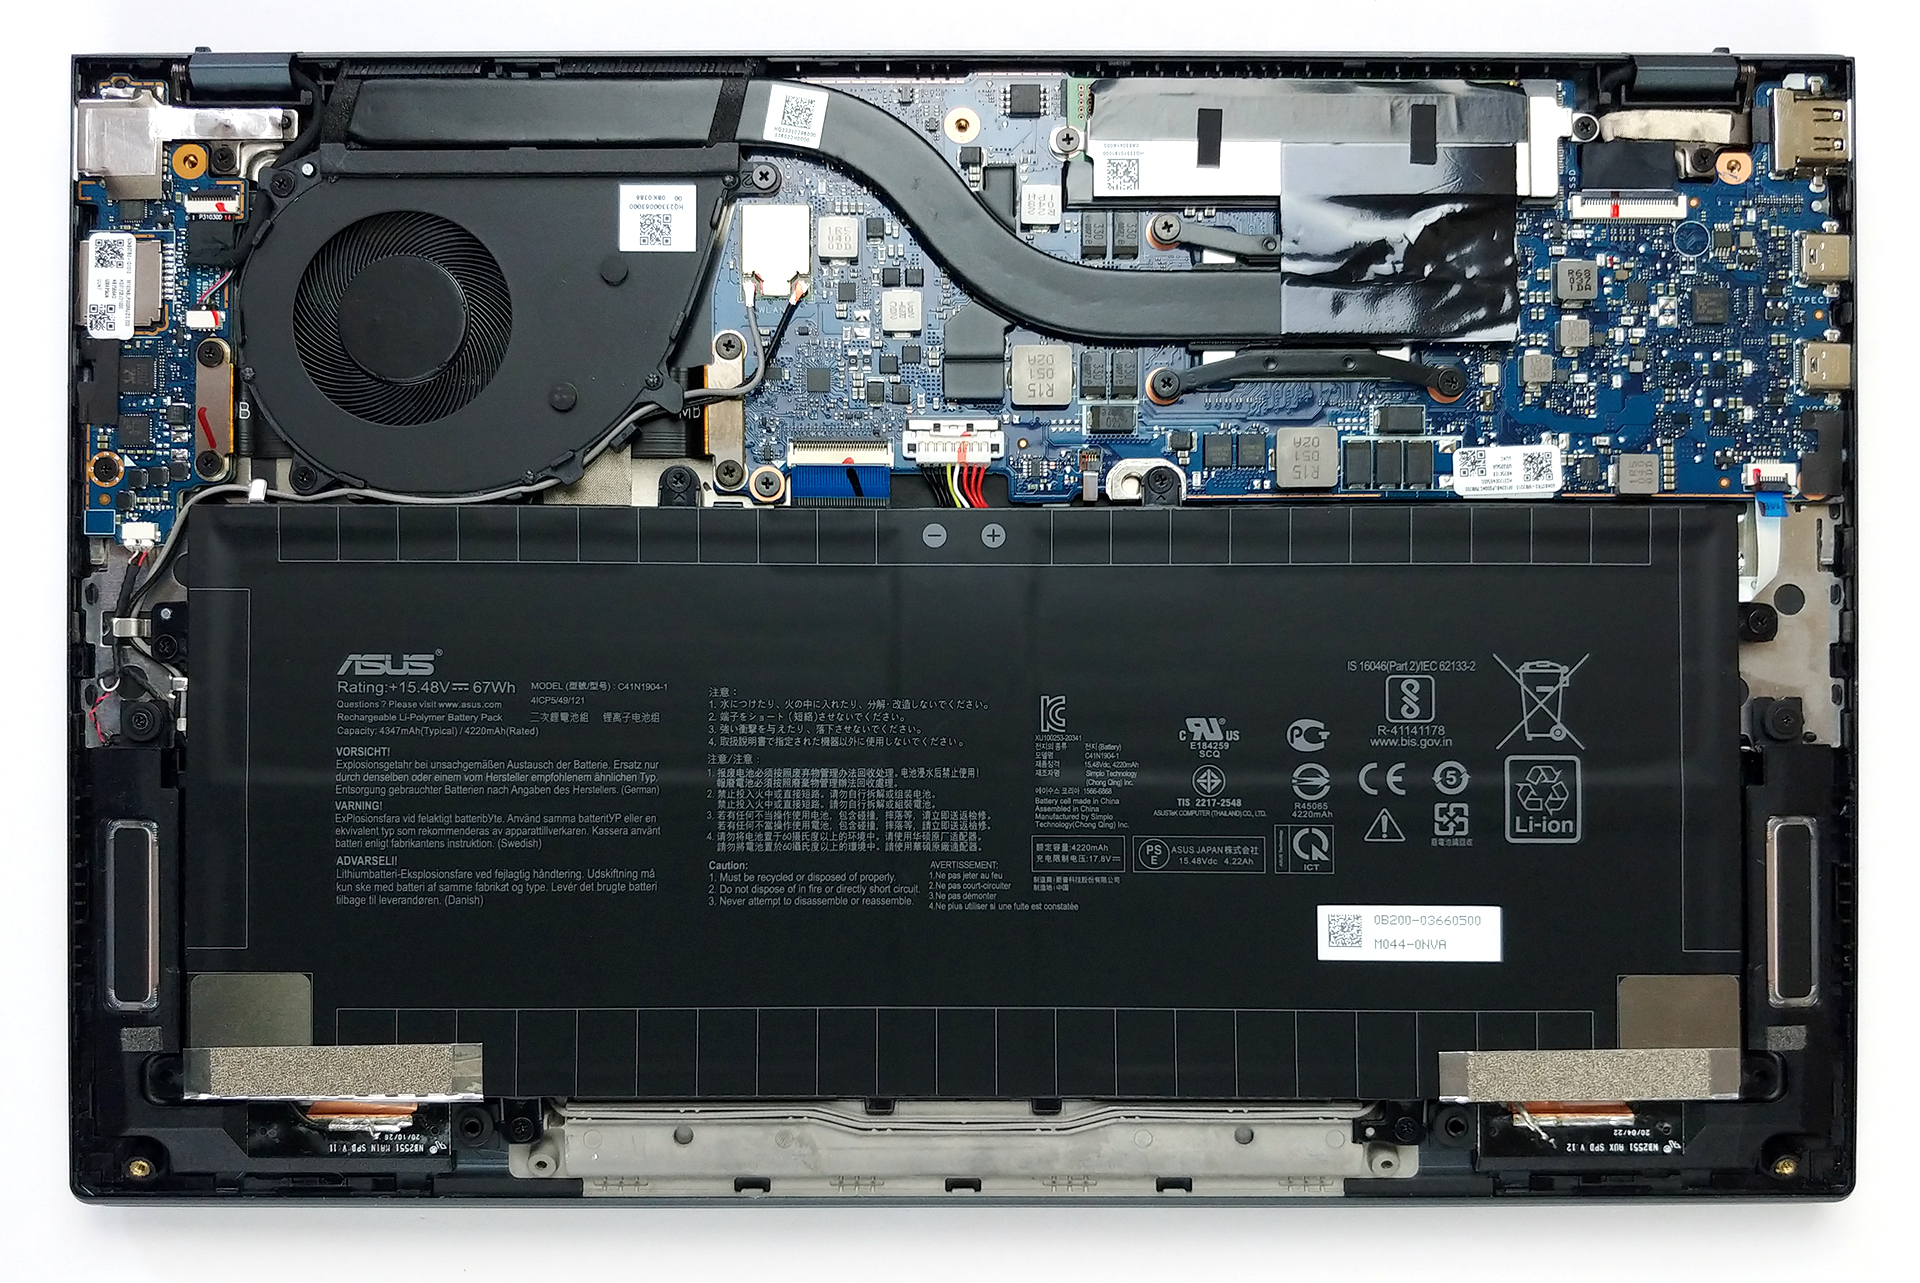 Asus ZenBook 13 OLED review (UM325SA - AMD Ryzen 7 5800U Cezanne)